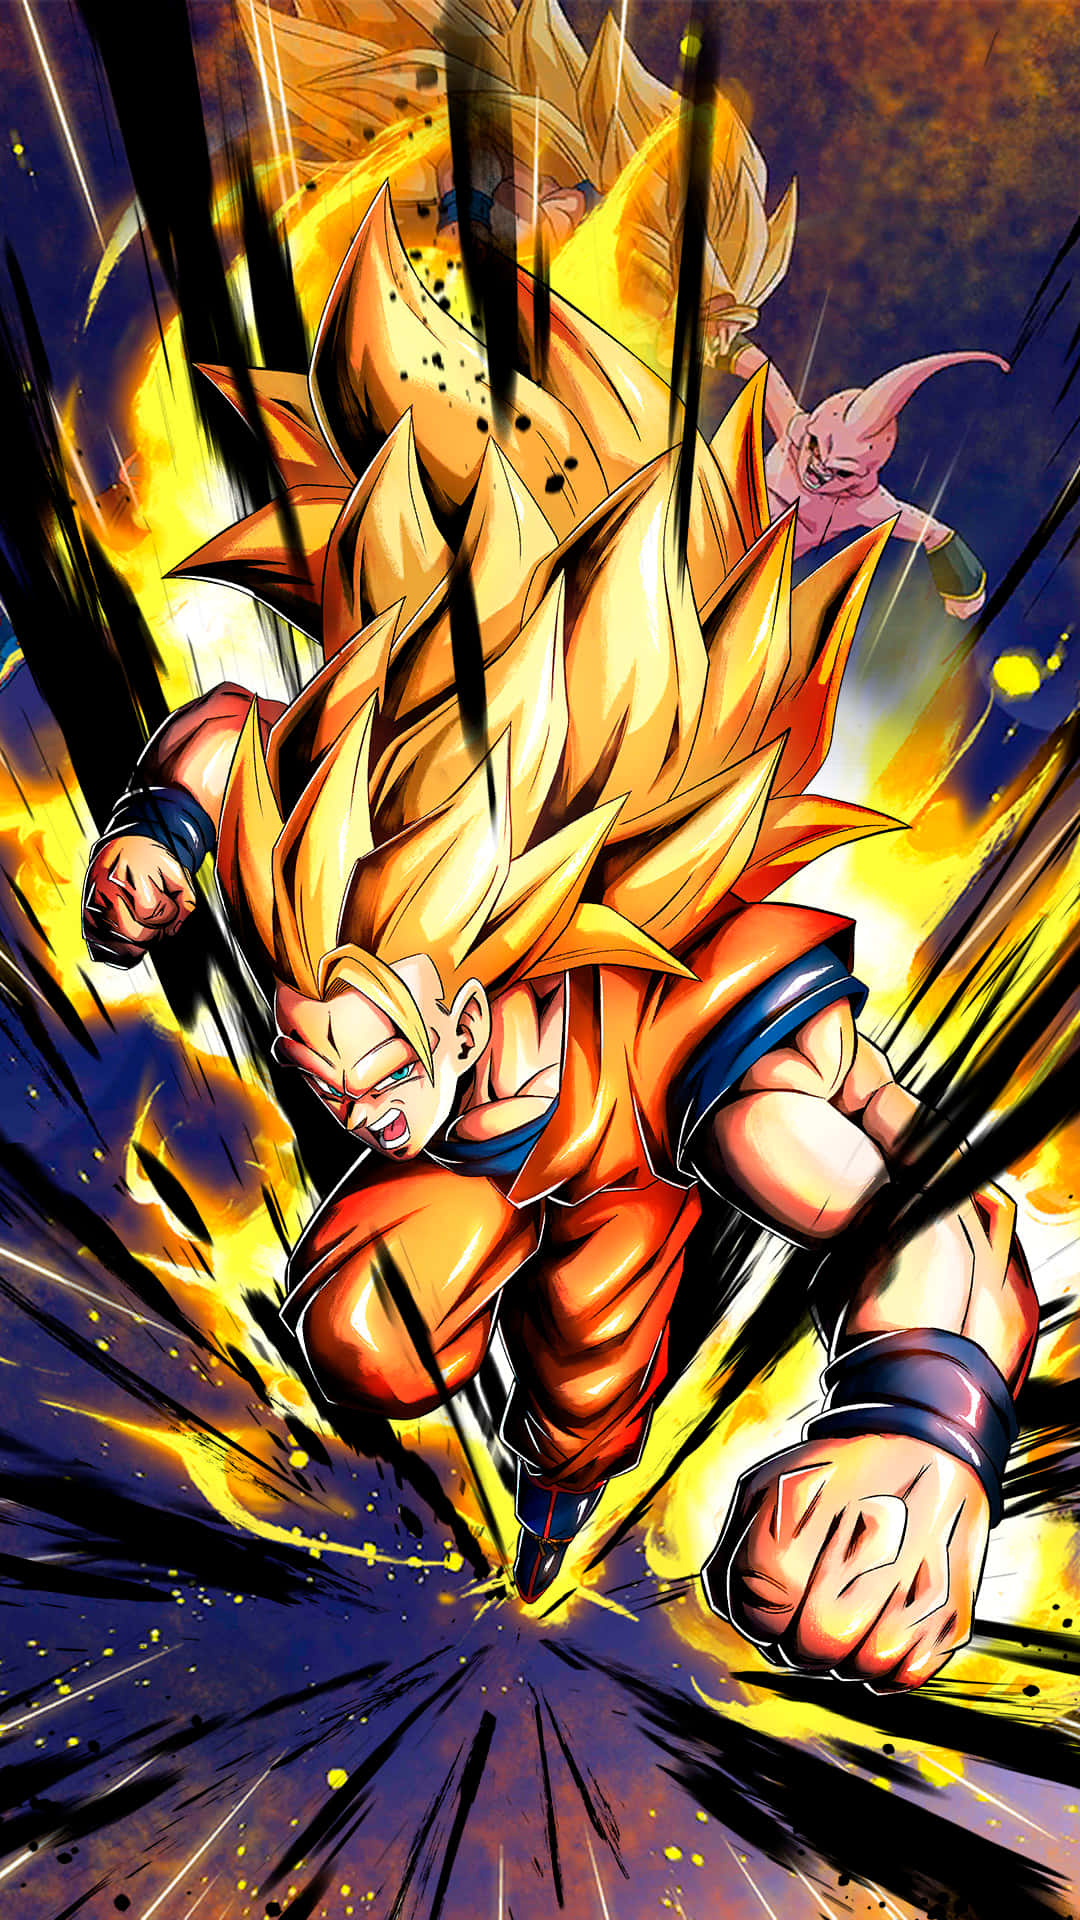 Dragonball Z Super Saiyan Flammande Goku. Wallpaper